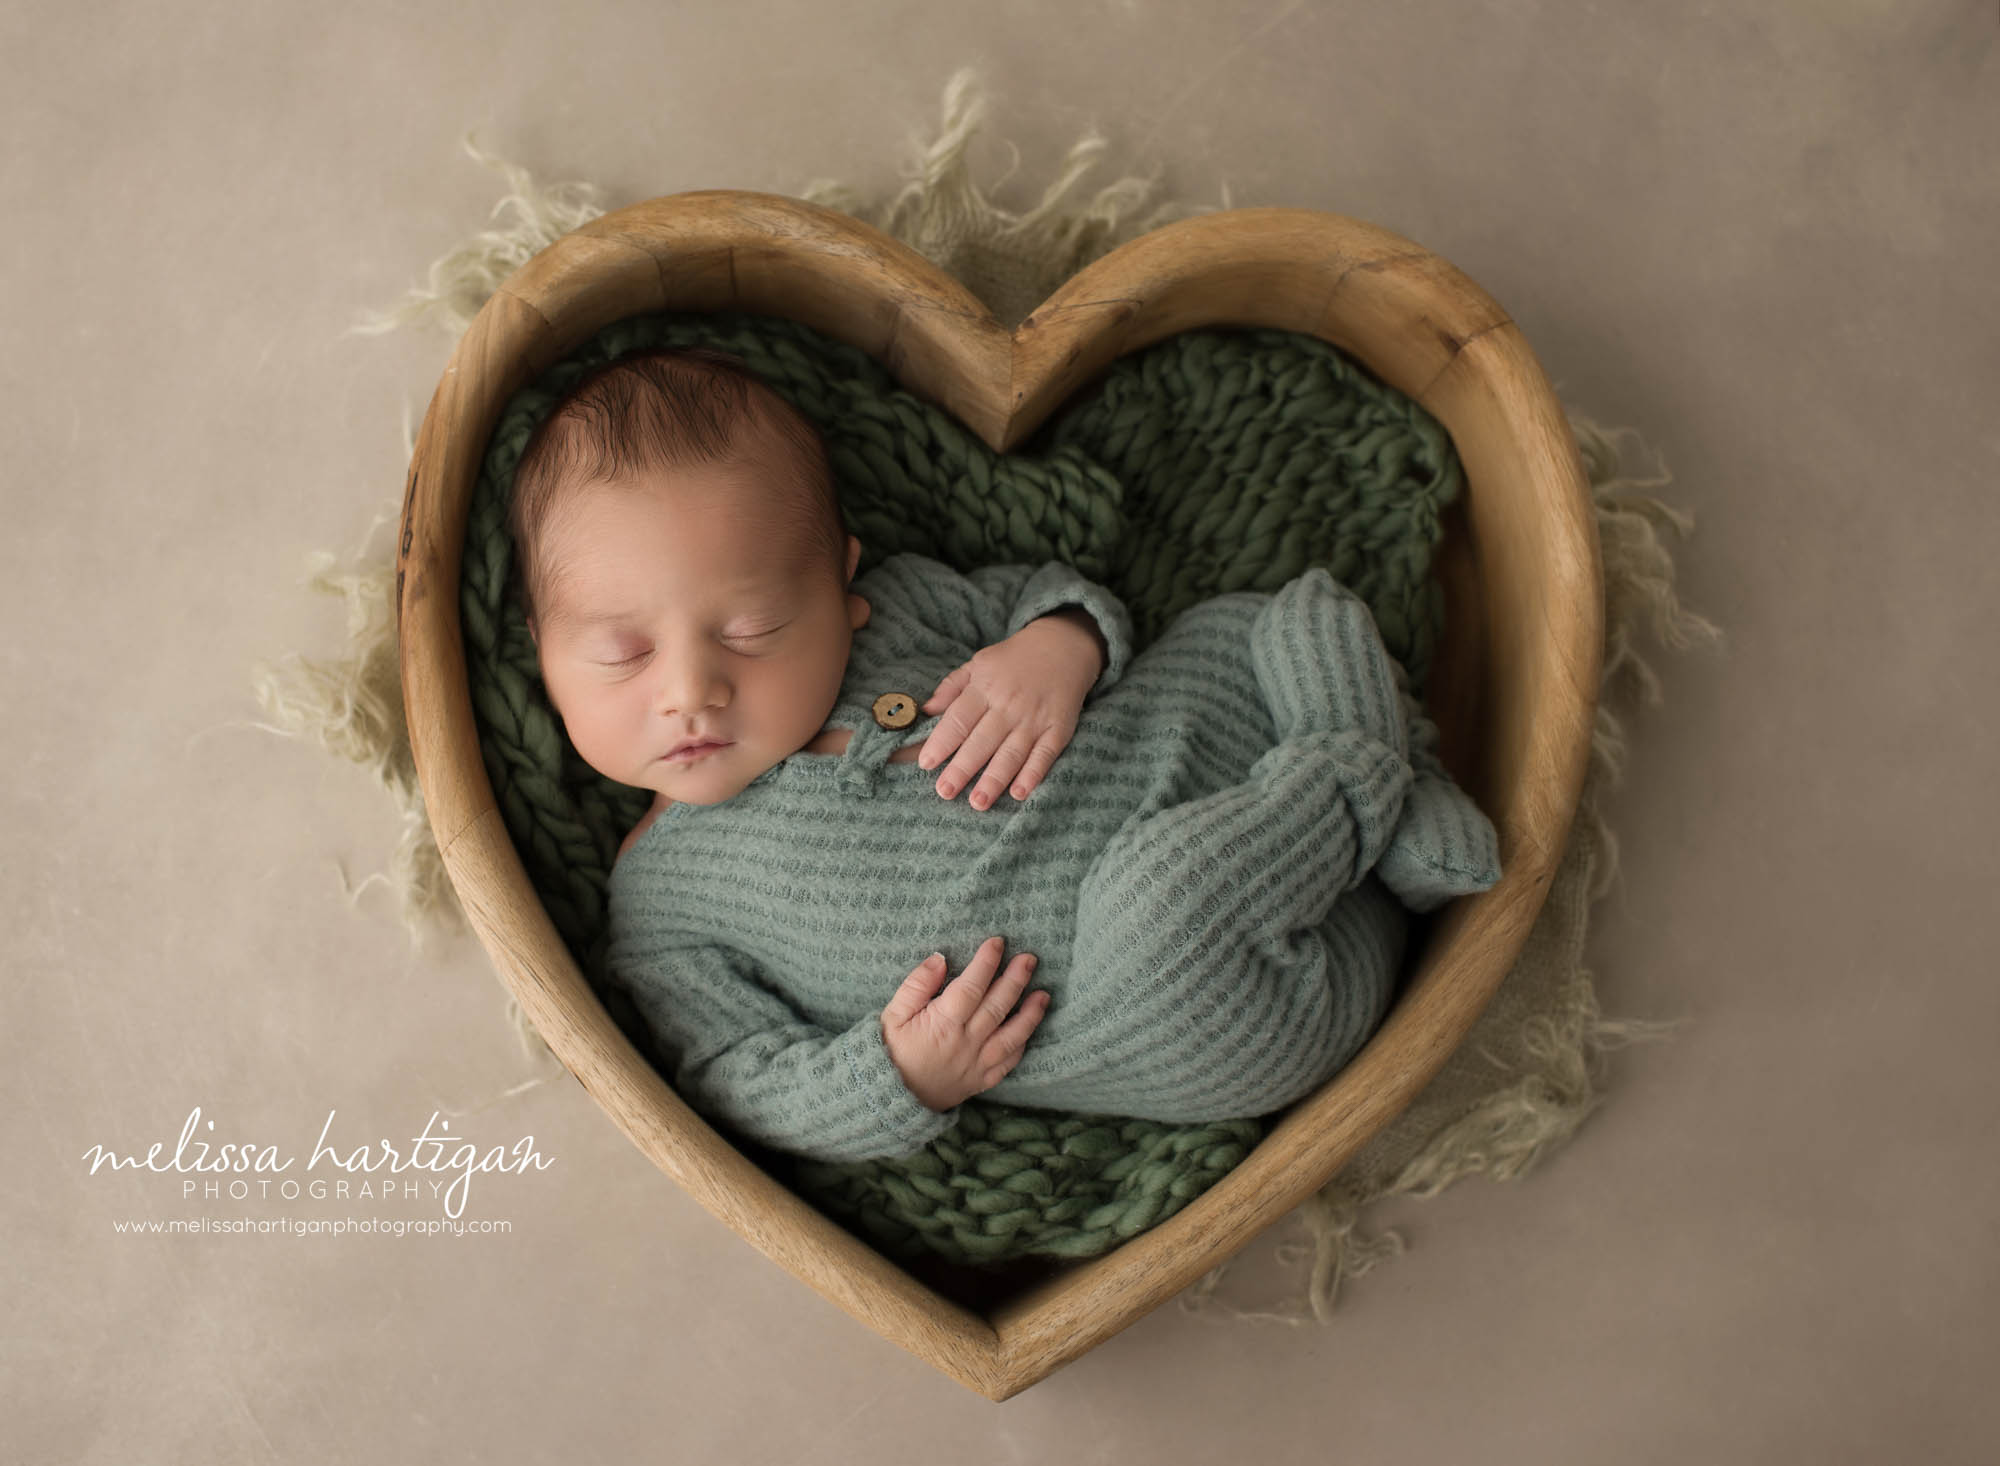 newborn baby boy posed in wooden heart shaped prop wearing green footed sleeper